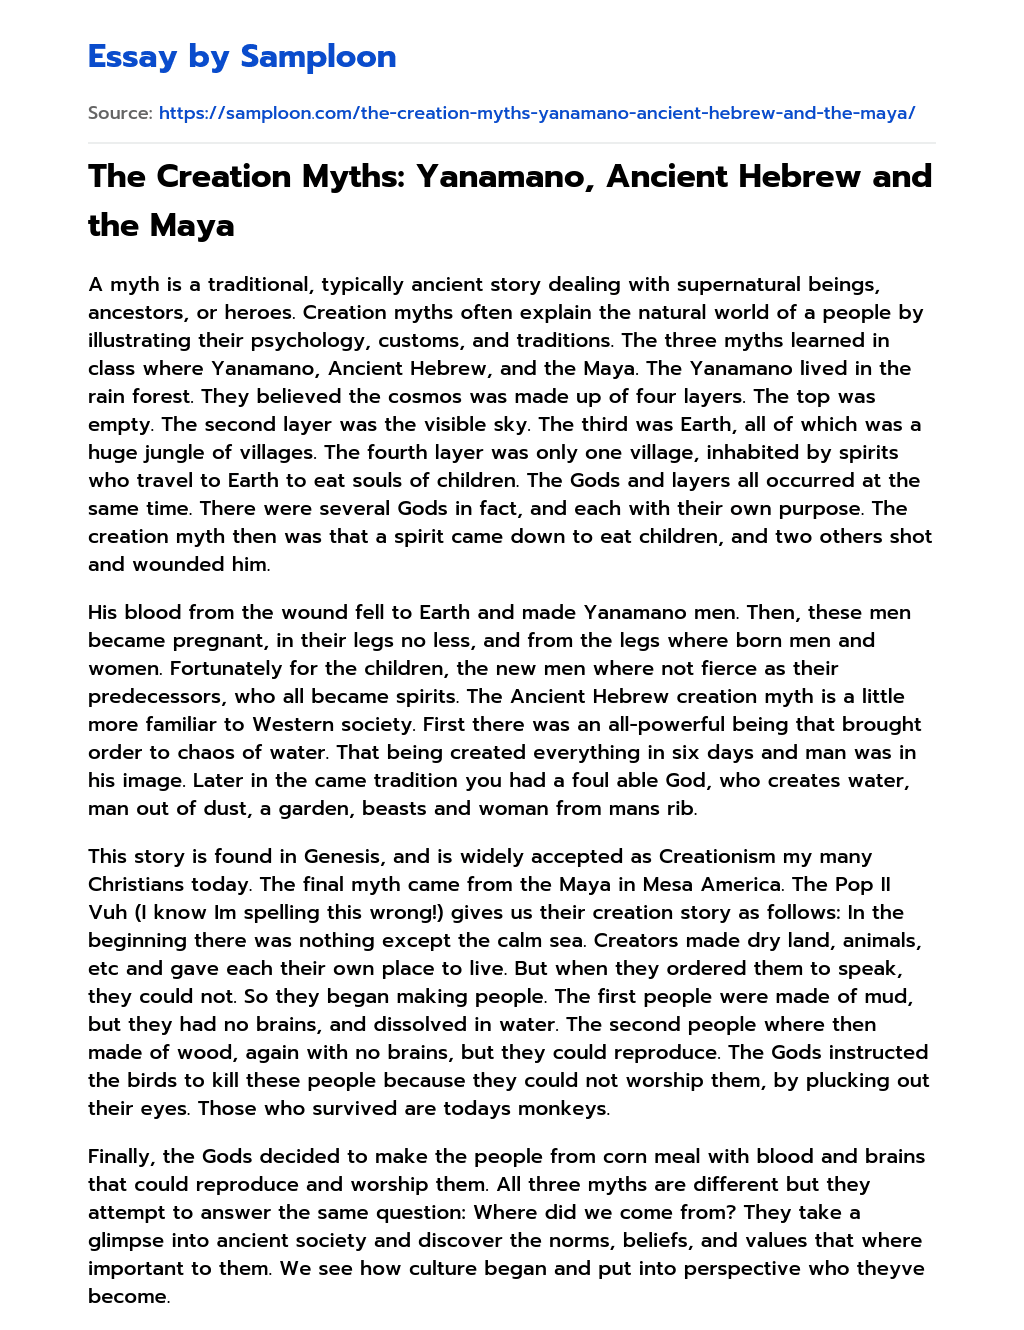 The Creation Myths: Yanamano, Ancient Hebrew and the Maya essay